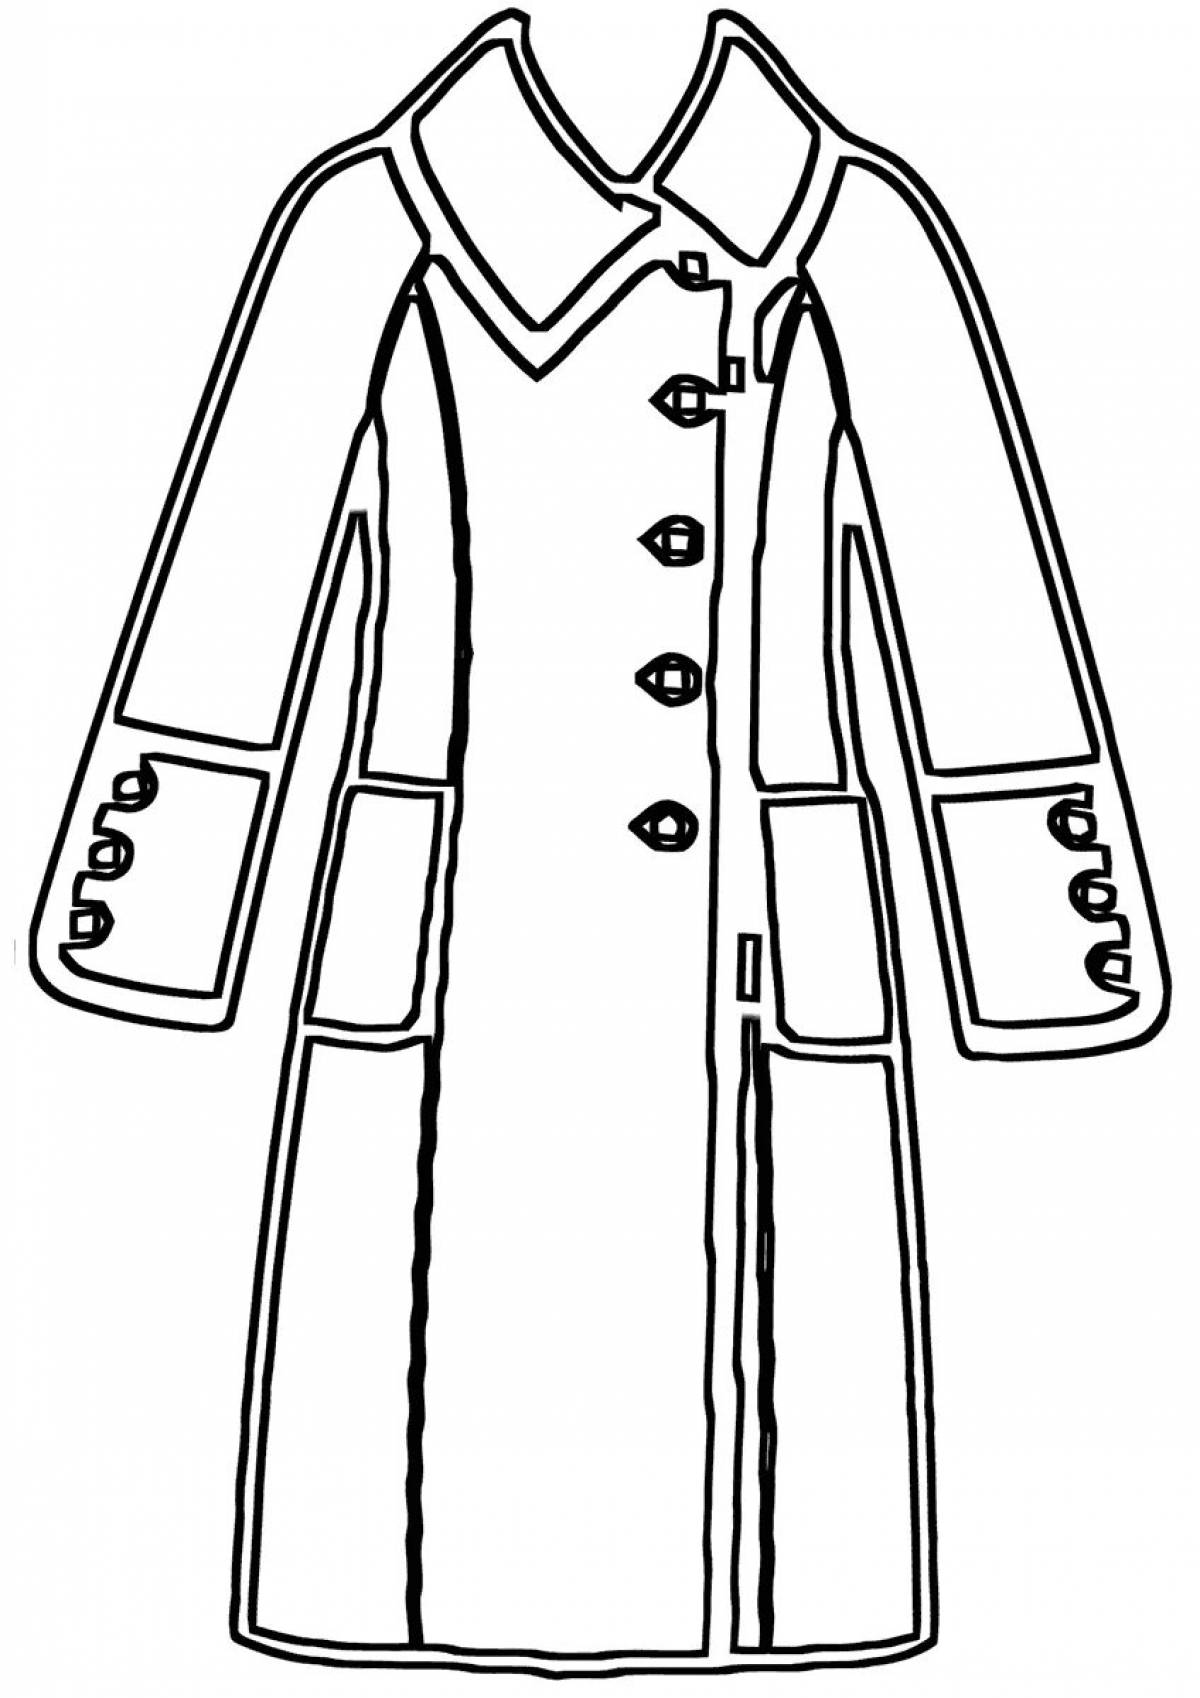 Coloring page elegant coat